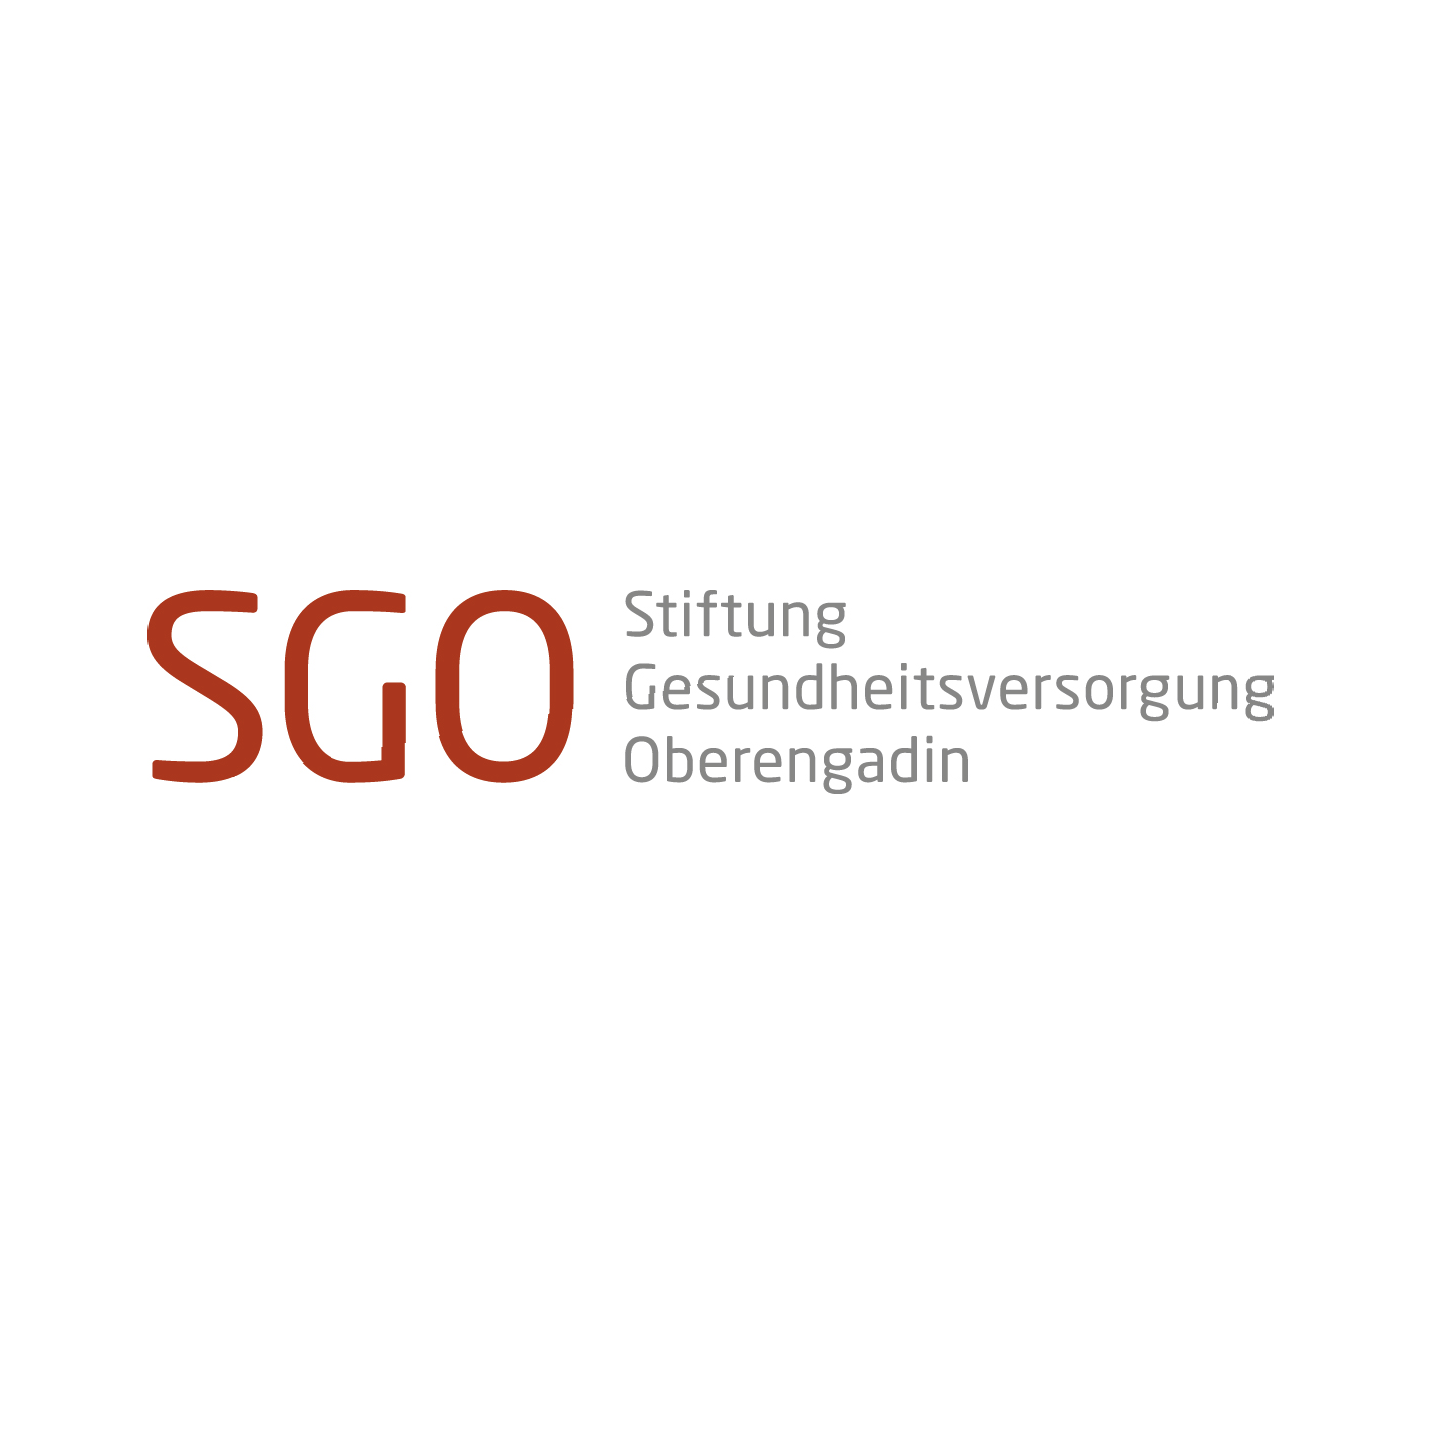 Stiftung Gesundheitsversorgung Oberengadin (SGO)